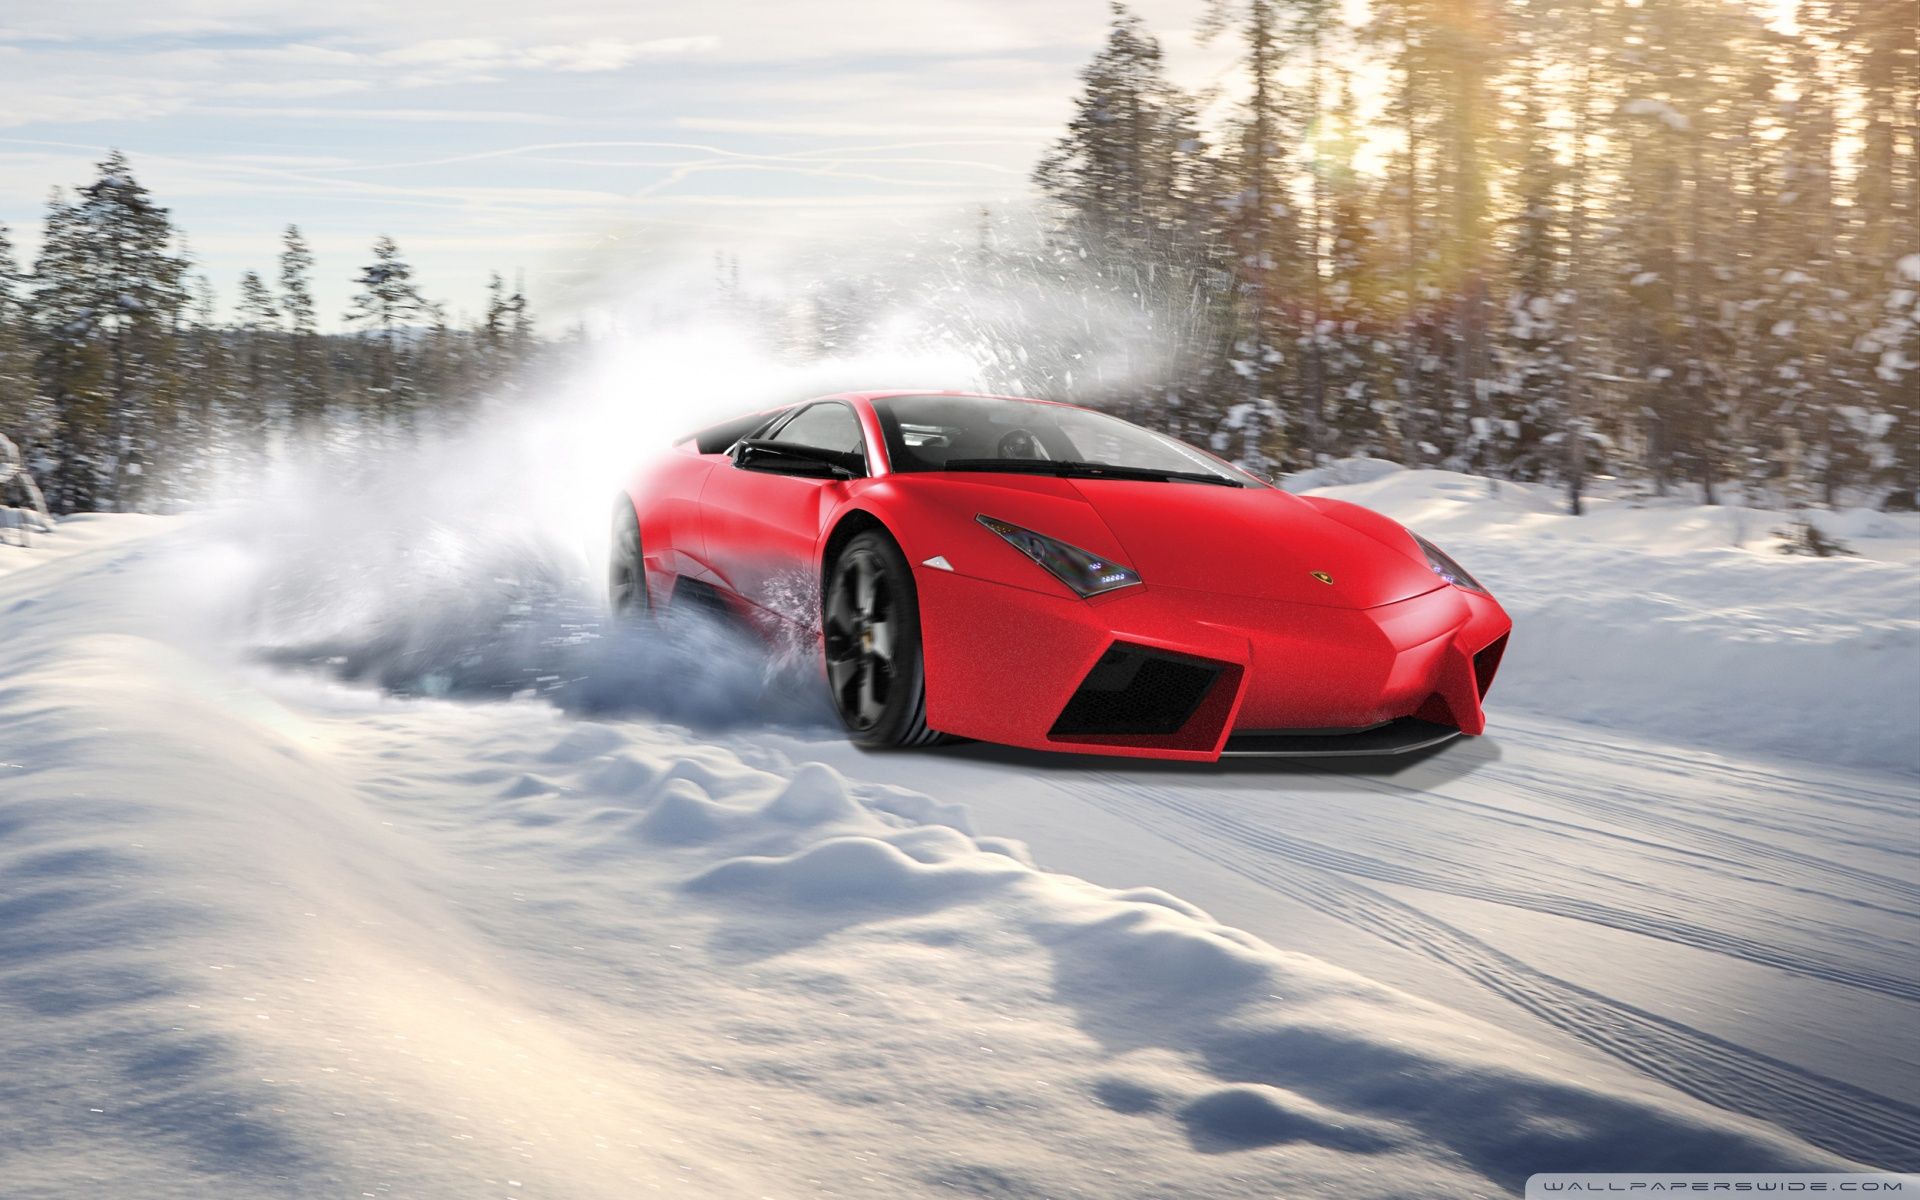 Lamborghini Drifting In Snow Ultra HD Desktop Background Wallpaper for 4K UHD TV, Widescreen & UltraWide Desktop & Laptop, Tablet